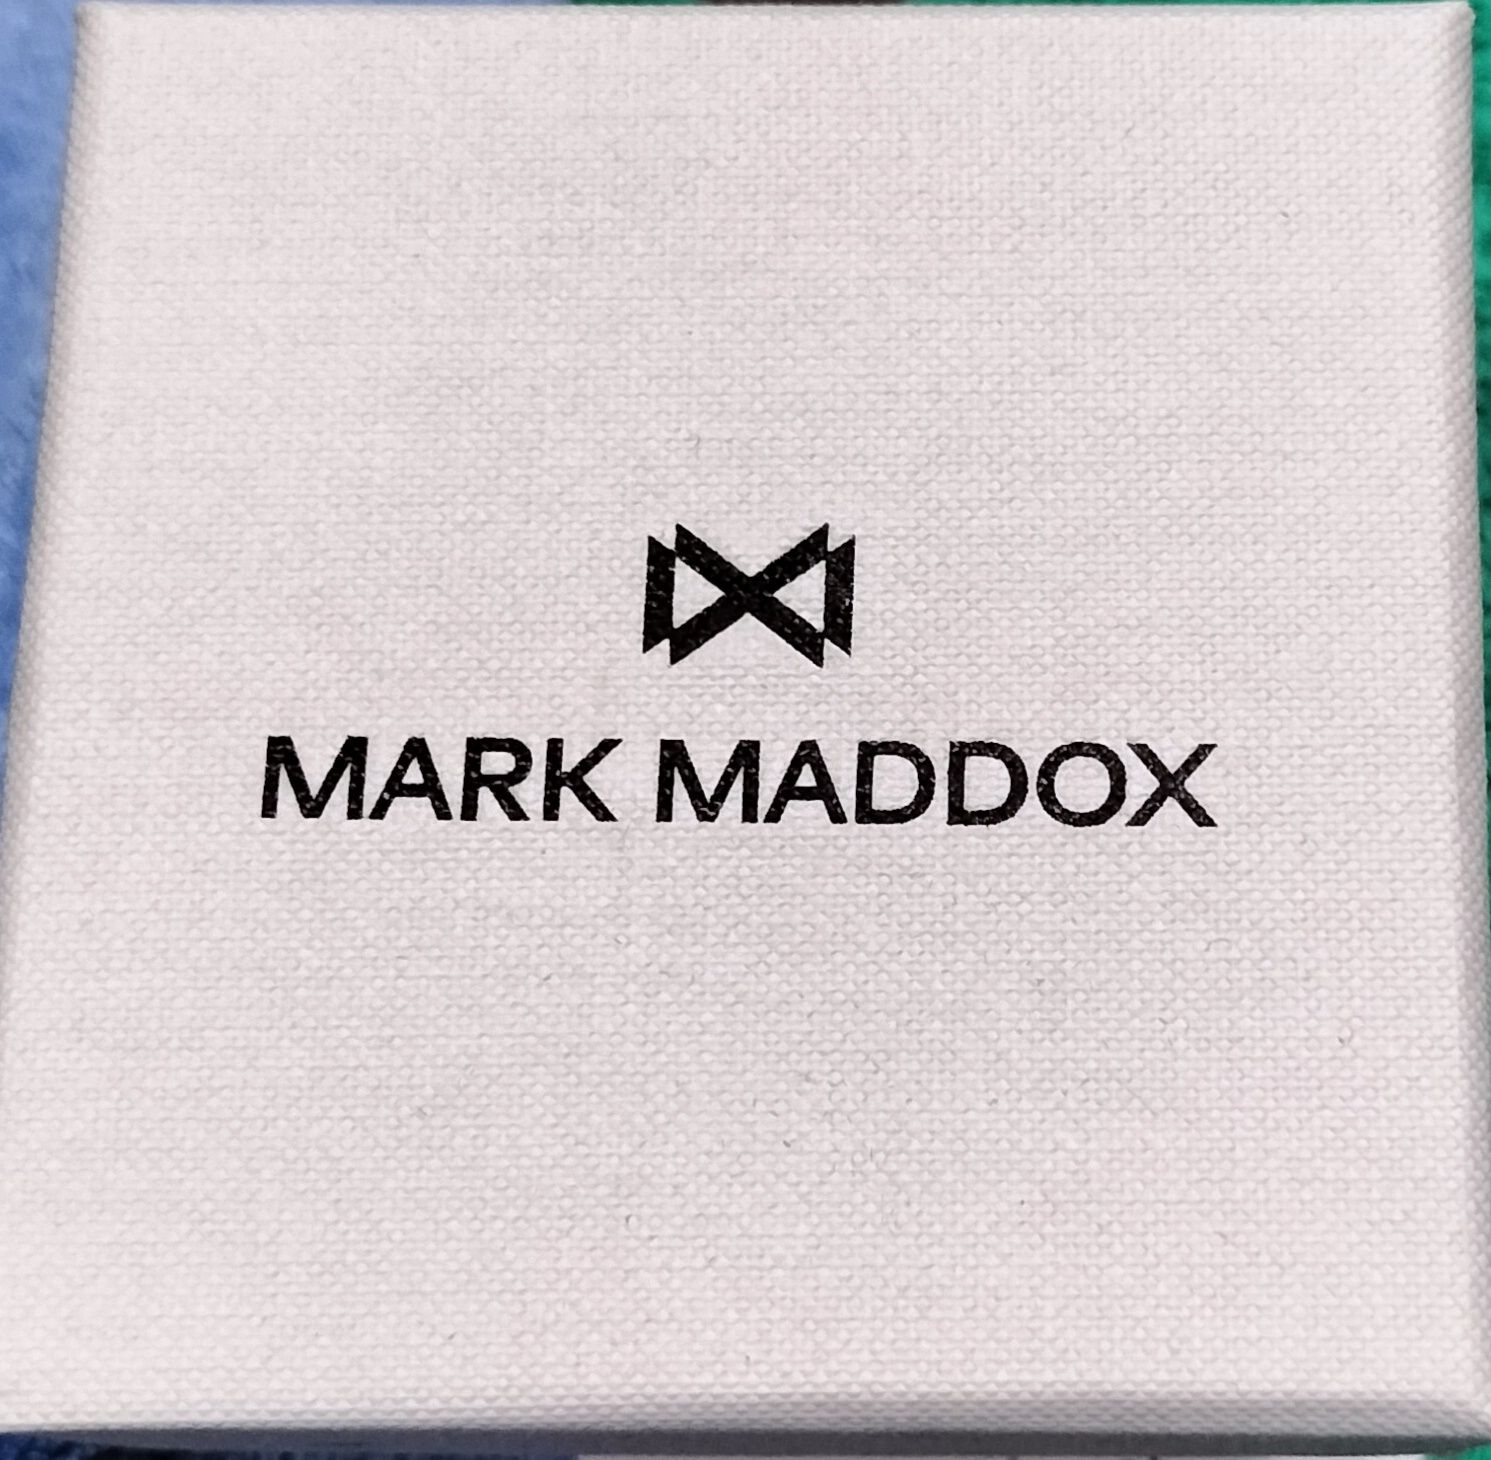 Relógio da Mark Maddox